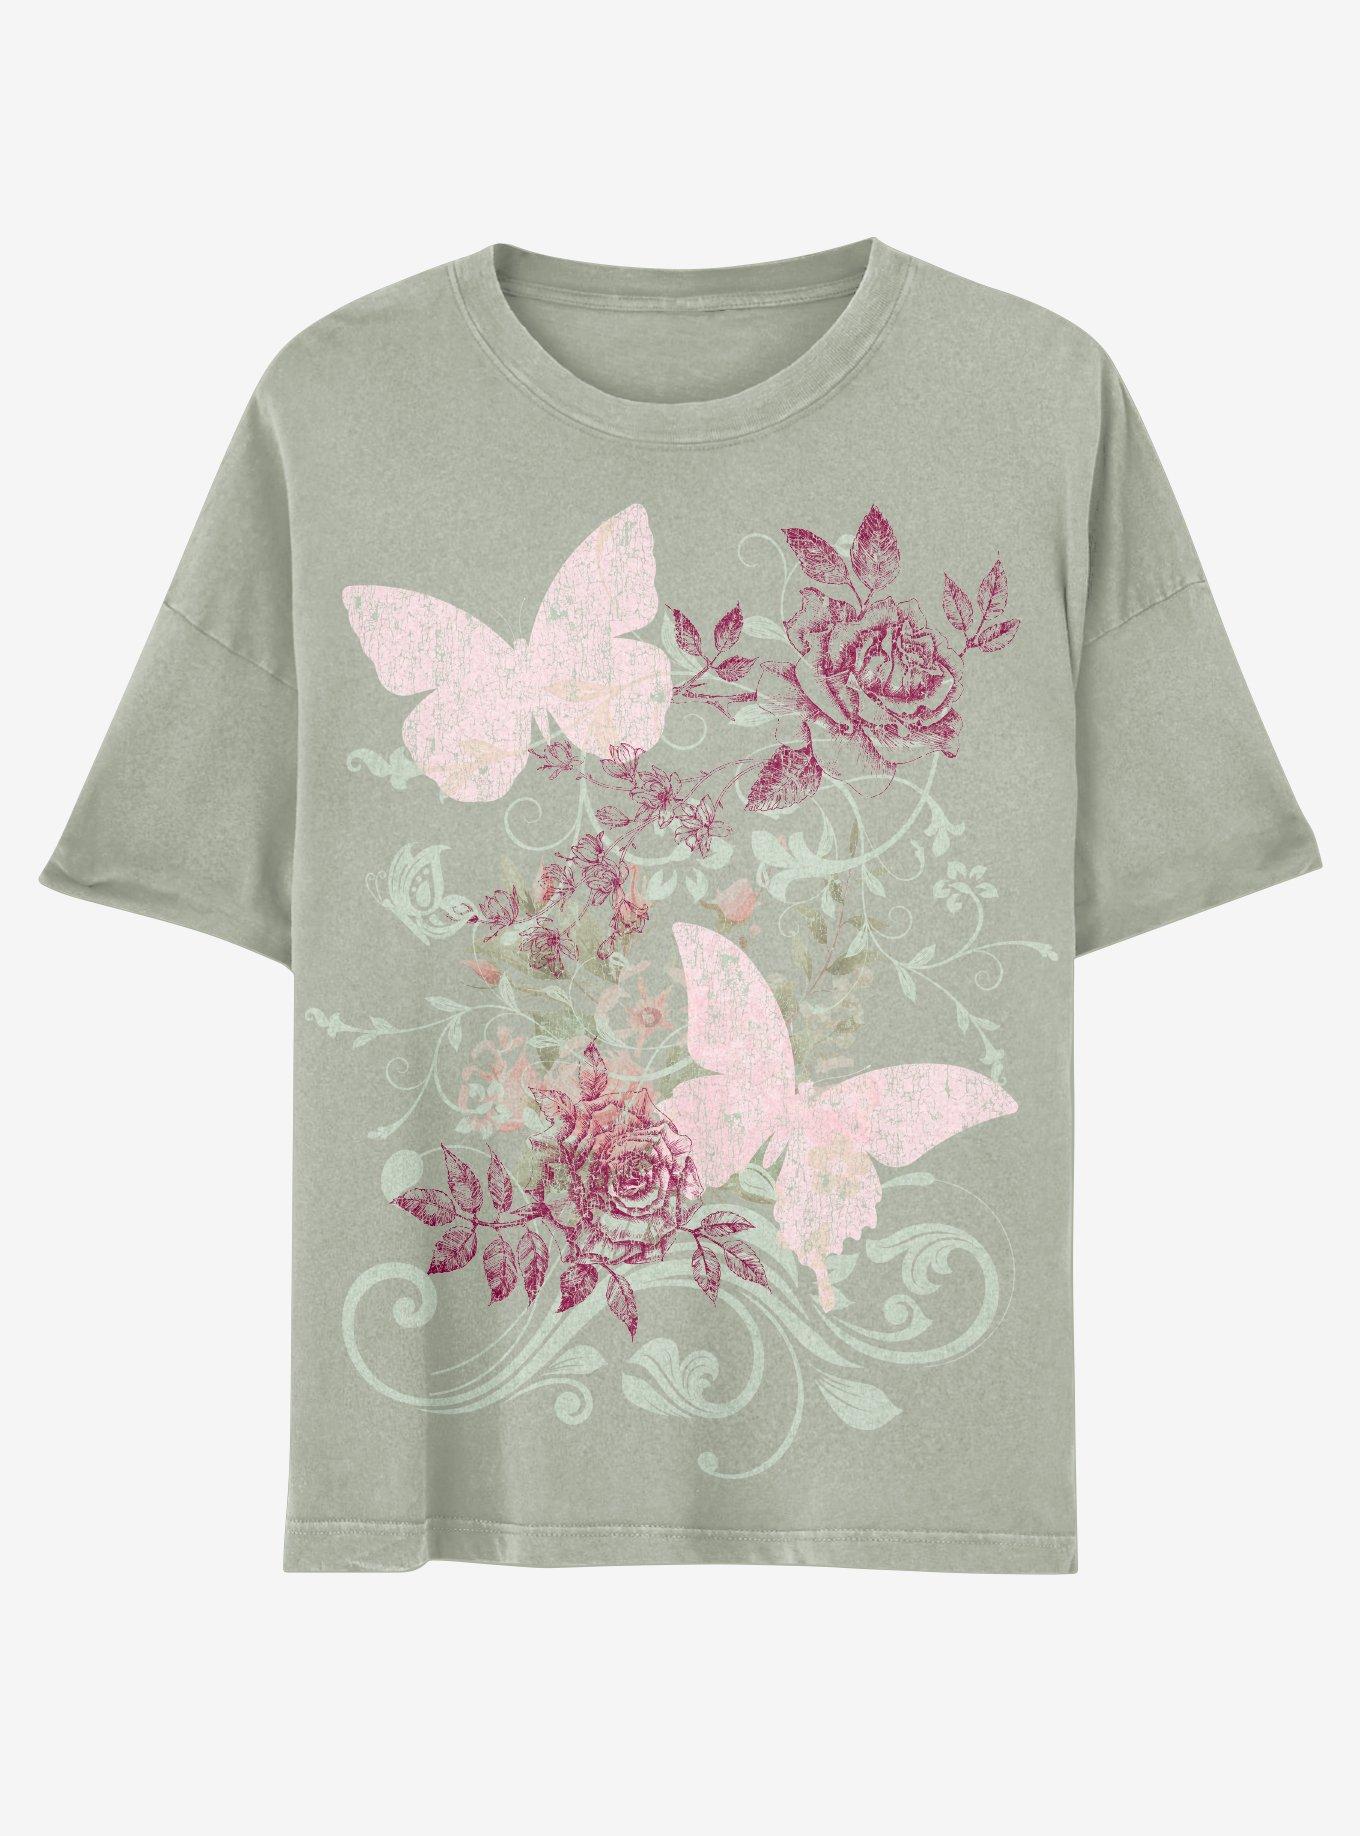 Butterfly Rose Boyfriend Fit Girls T-Shirt, MULTI, hi-res